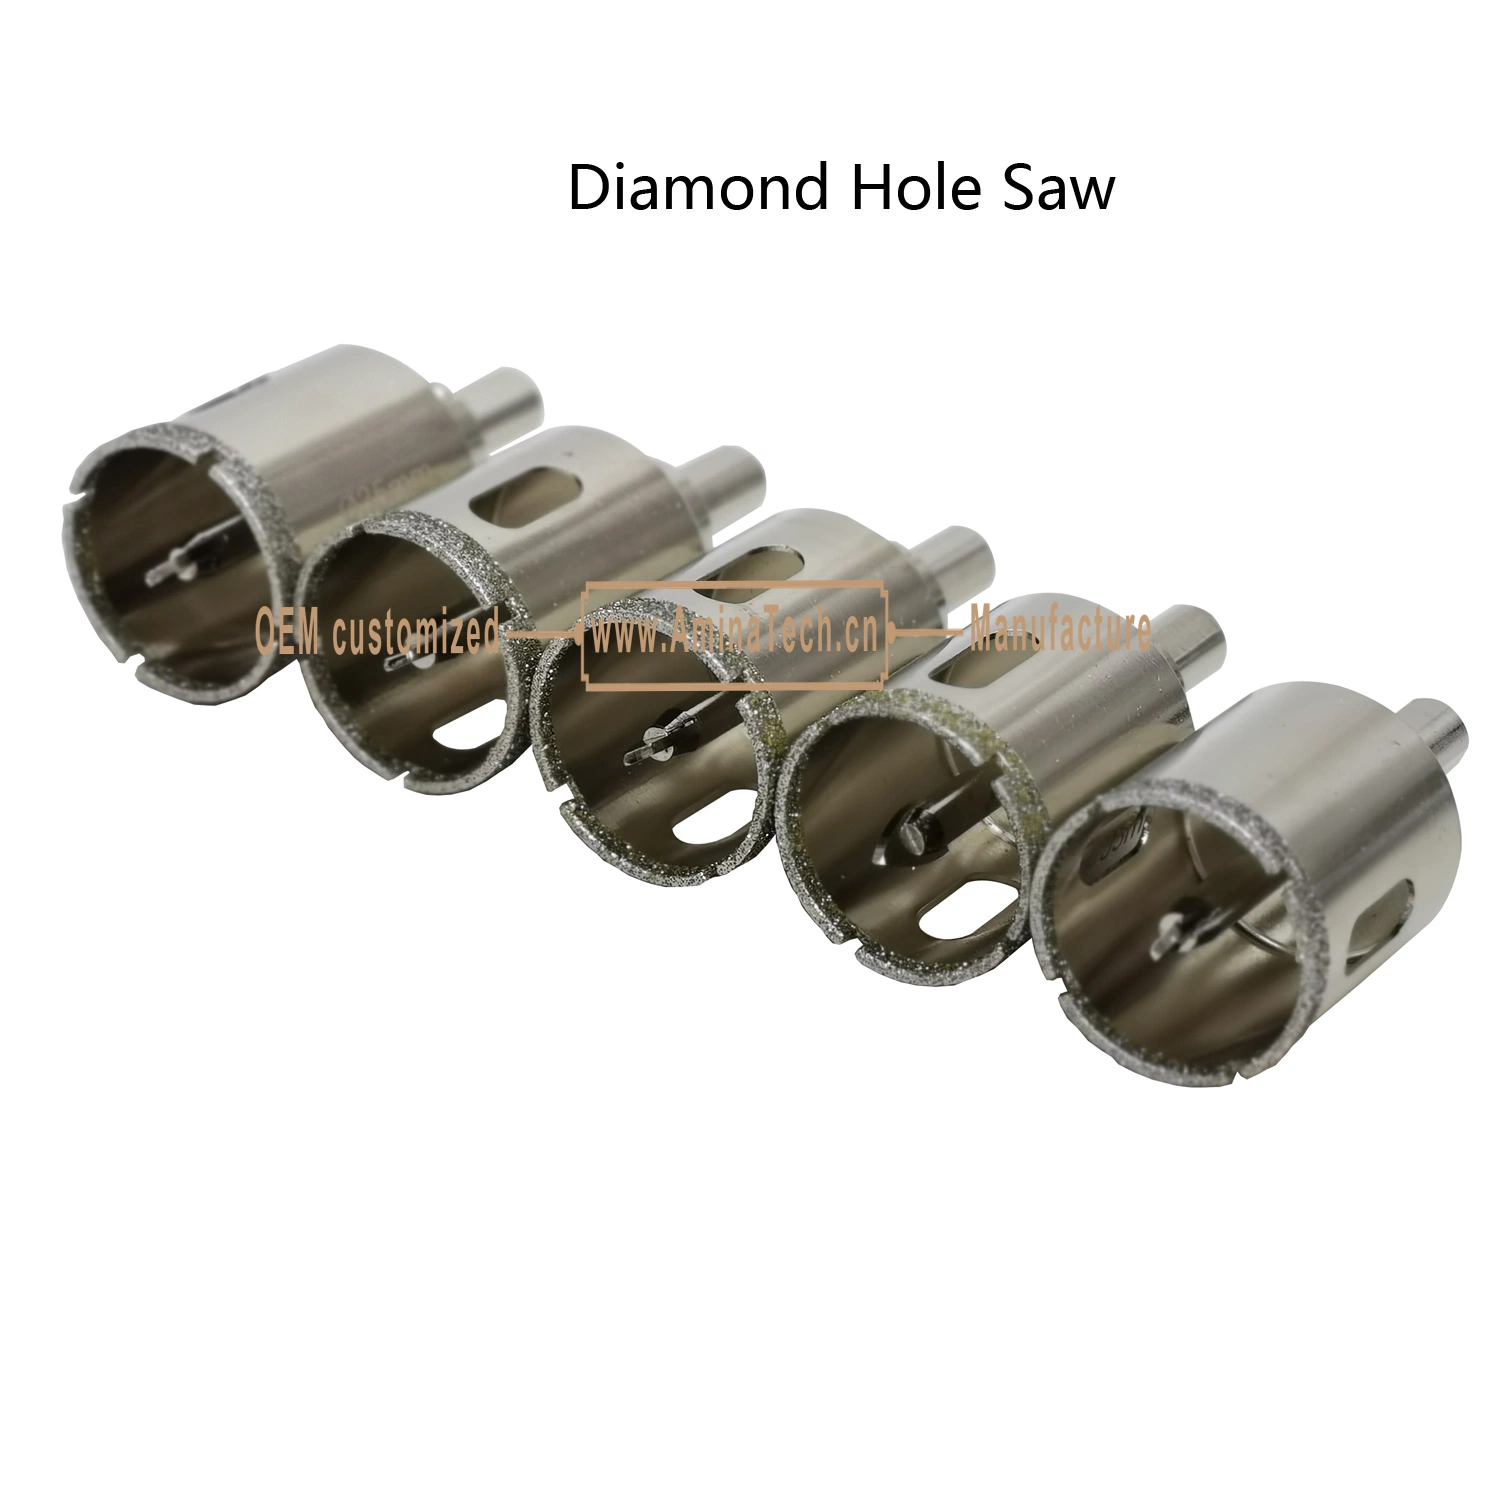 Diamond Hole Saw,Ceramic and Glass,Drill